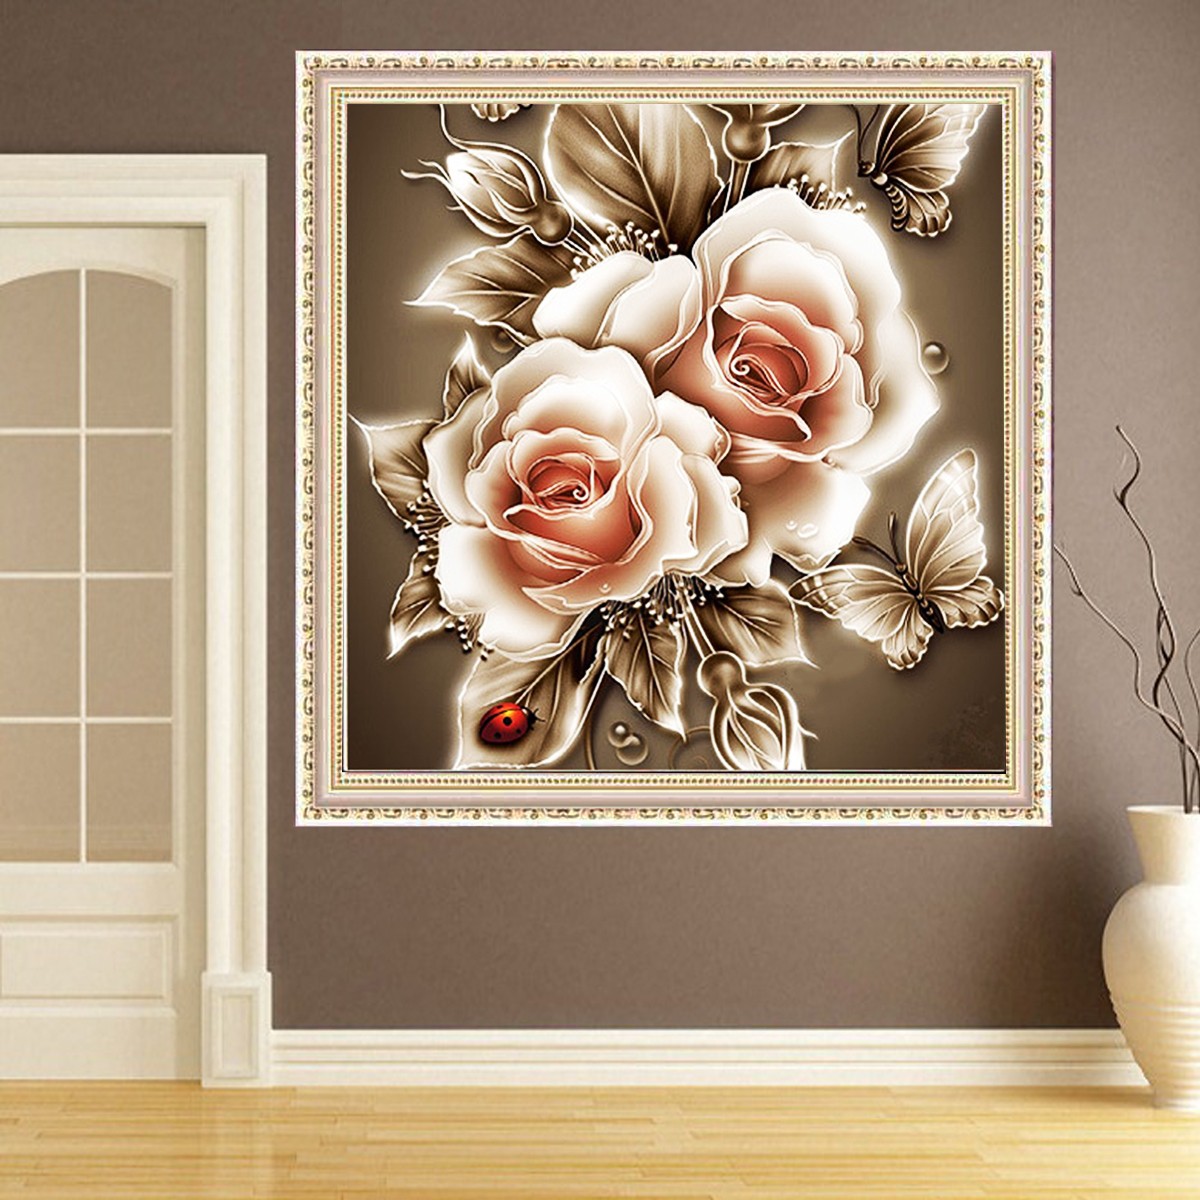 DIY-5D-Diamond-Painting-Kit-Retro-Flower-Handmade-Craft-Cross-Stitch-Embroidery-Home-Office-Wall-Dec-1350574-6